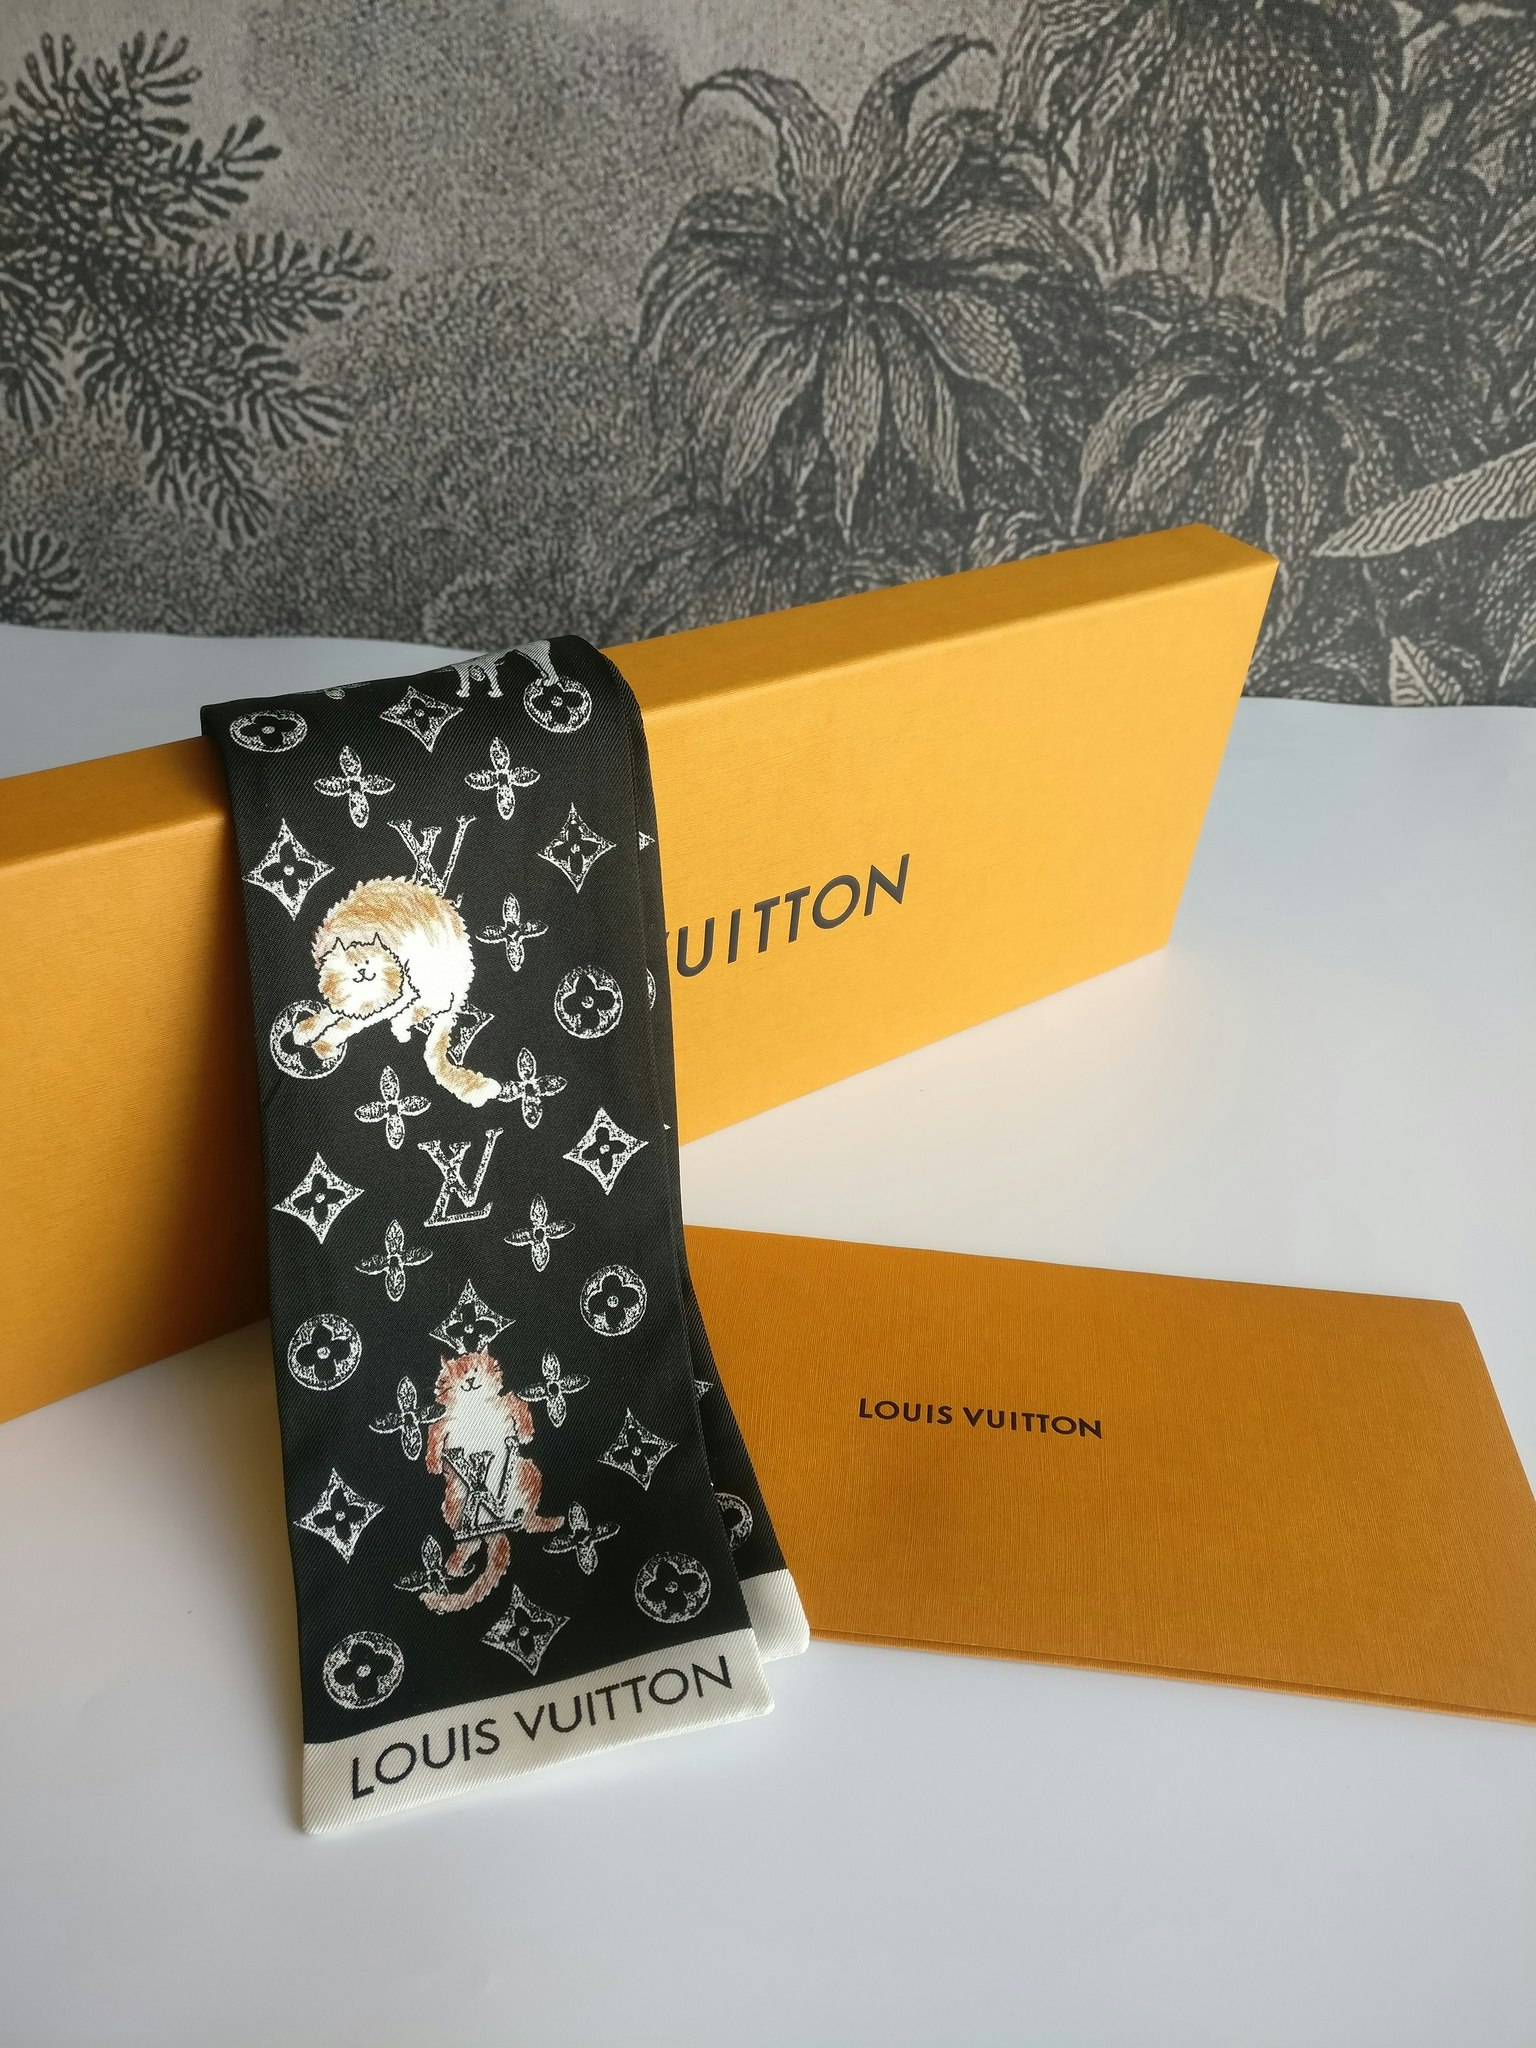 Louis Vuitton bandeau Catogram limited edition - Good or Bag